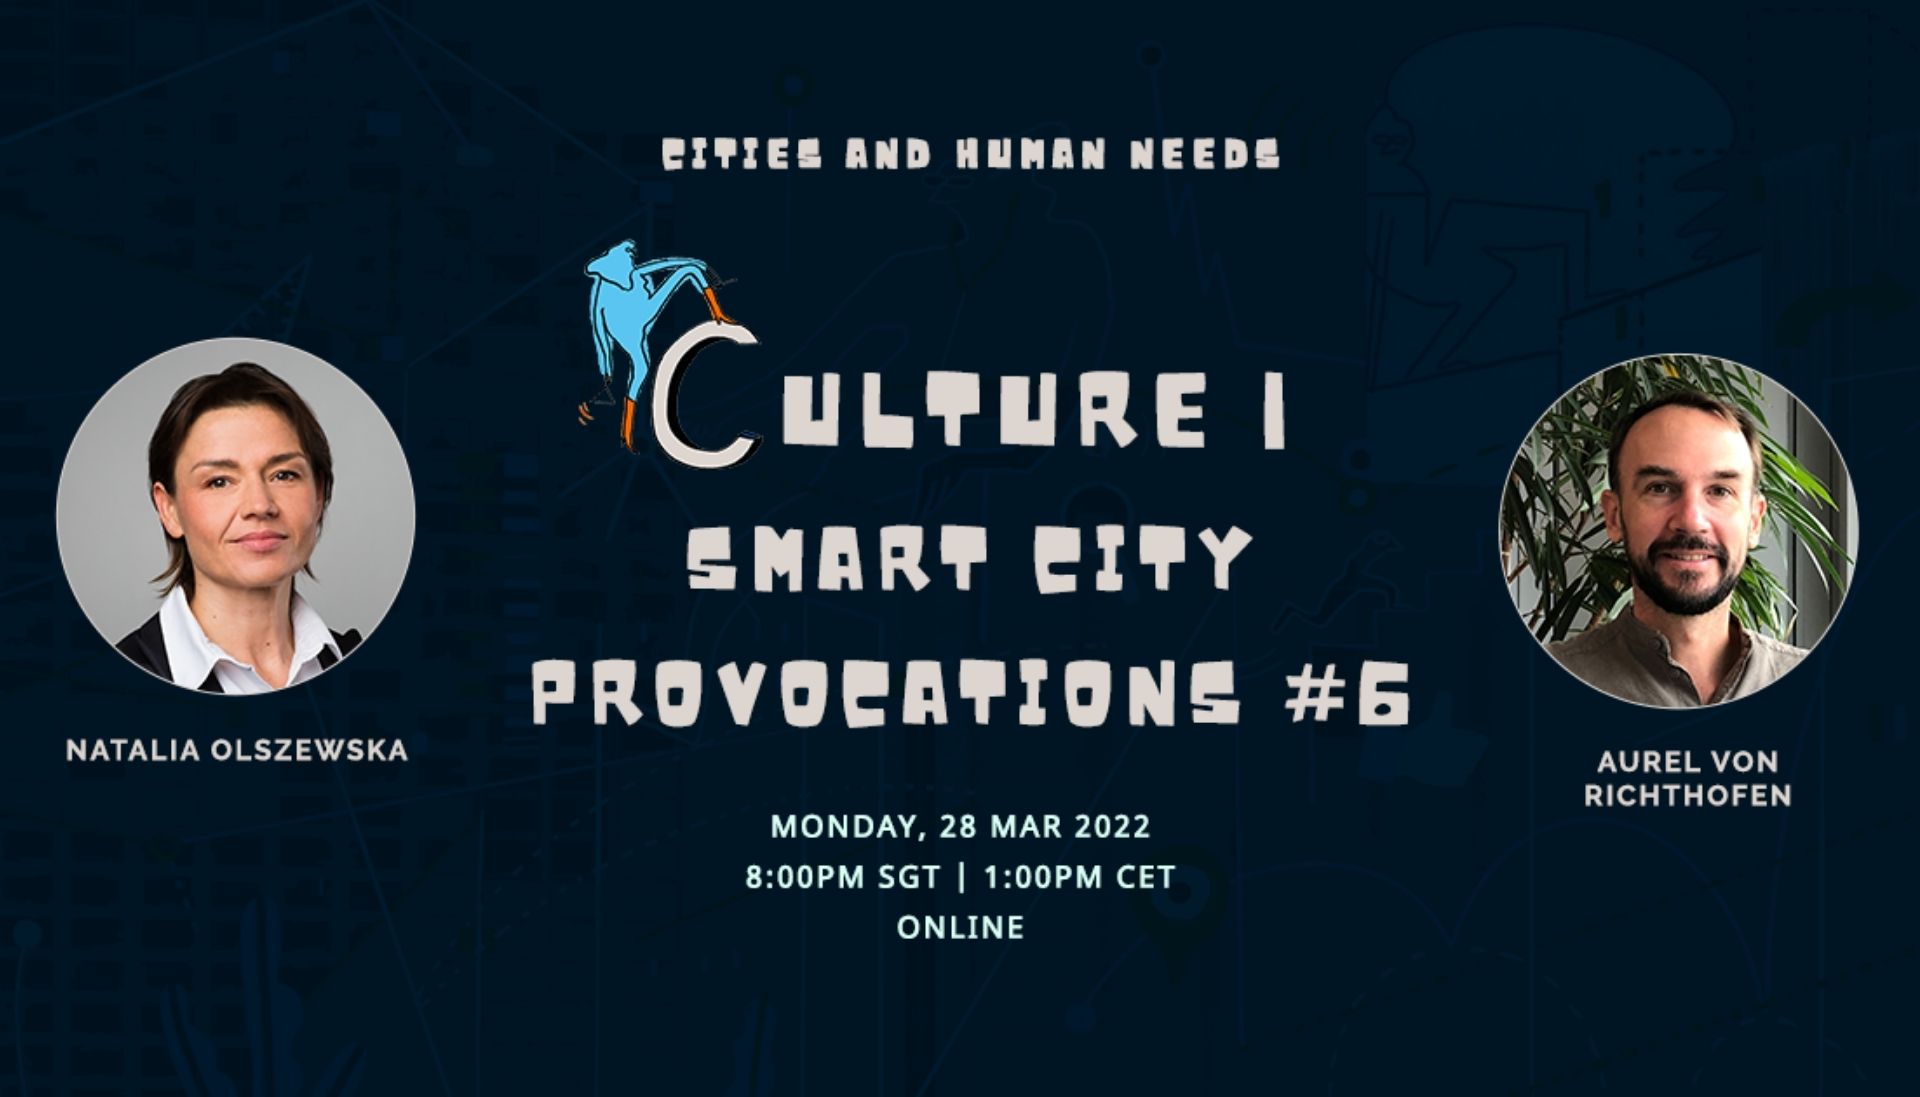 culture and smart city provocations_webinar with natalia olszewska1 | polandshiok.sg